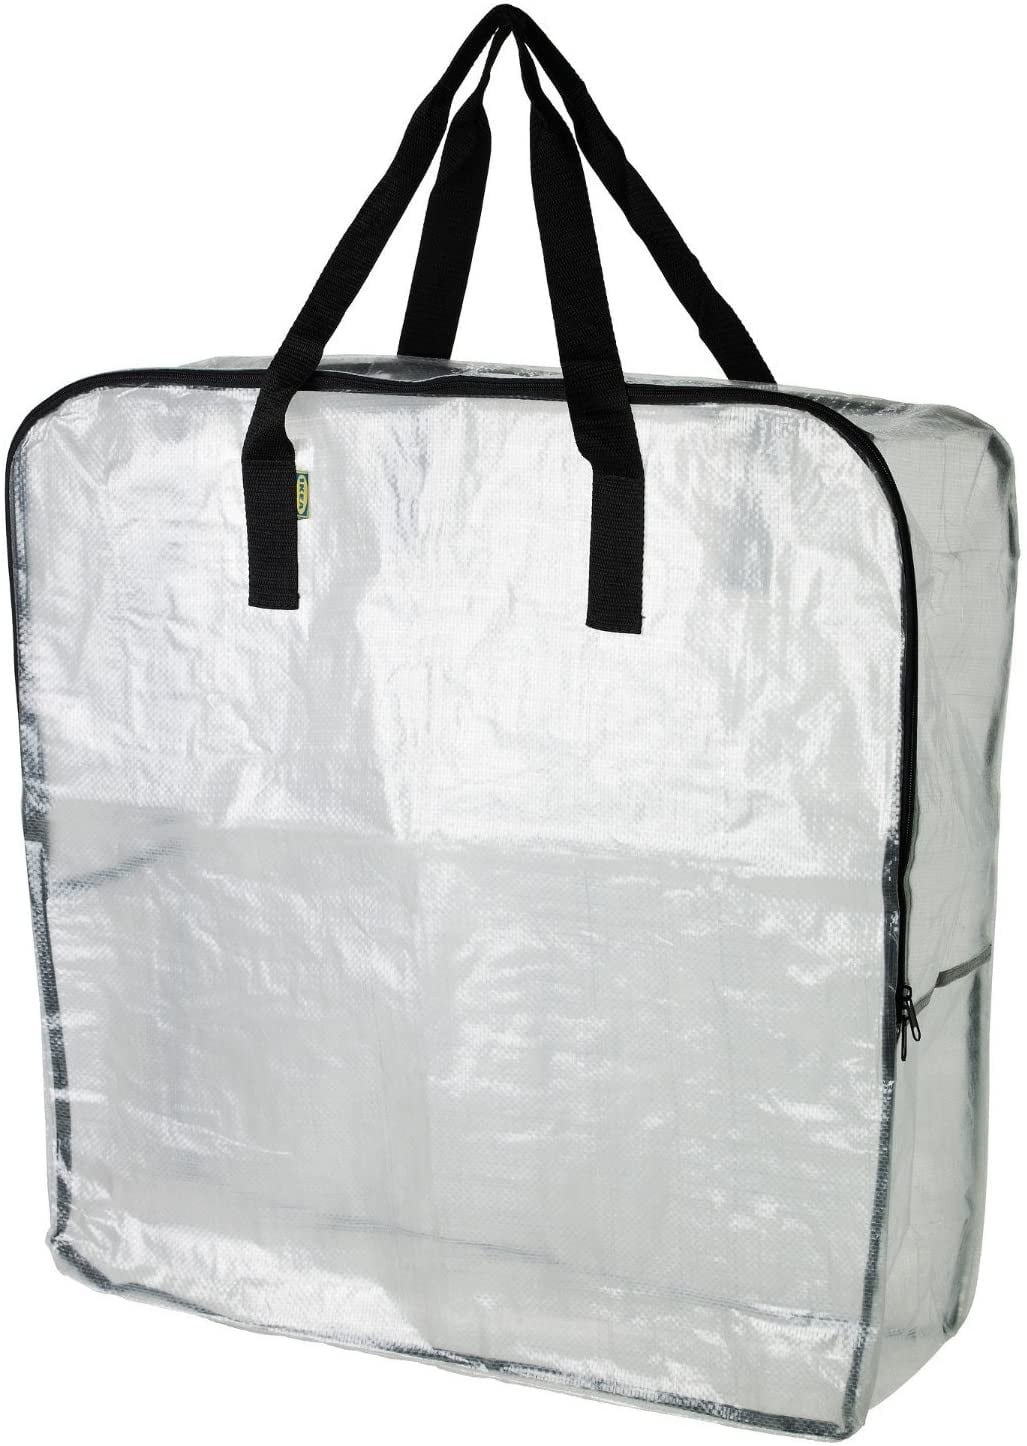 IKEA DIMPA Recycling Bag 9 Gallon 3 Pk White/ Dark Gray/ Light Gray New in Bag 